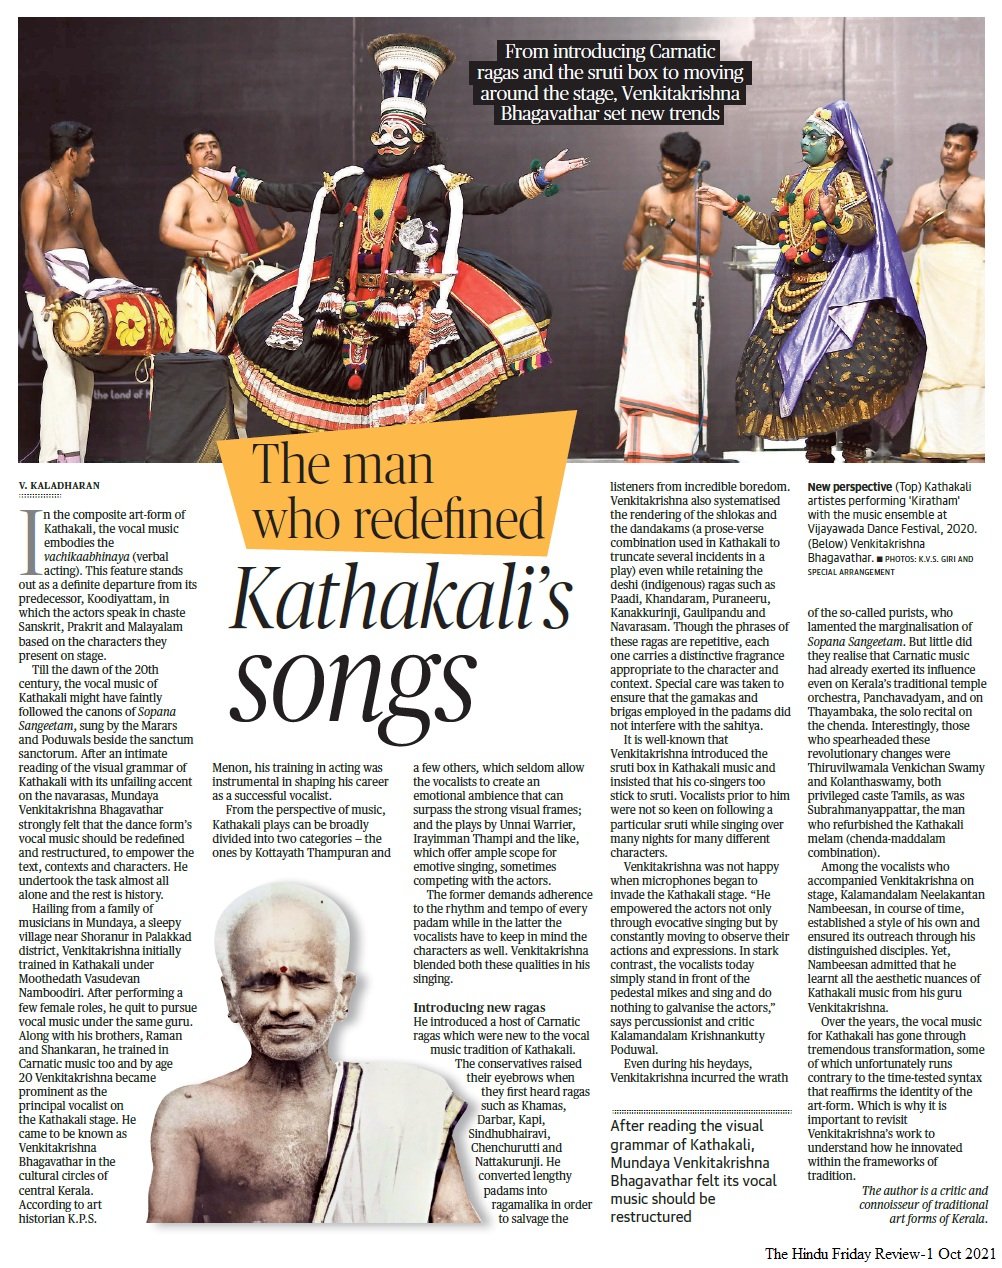 The man who redefined Kathakali’s songs - V. Kaladharan